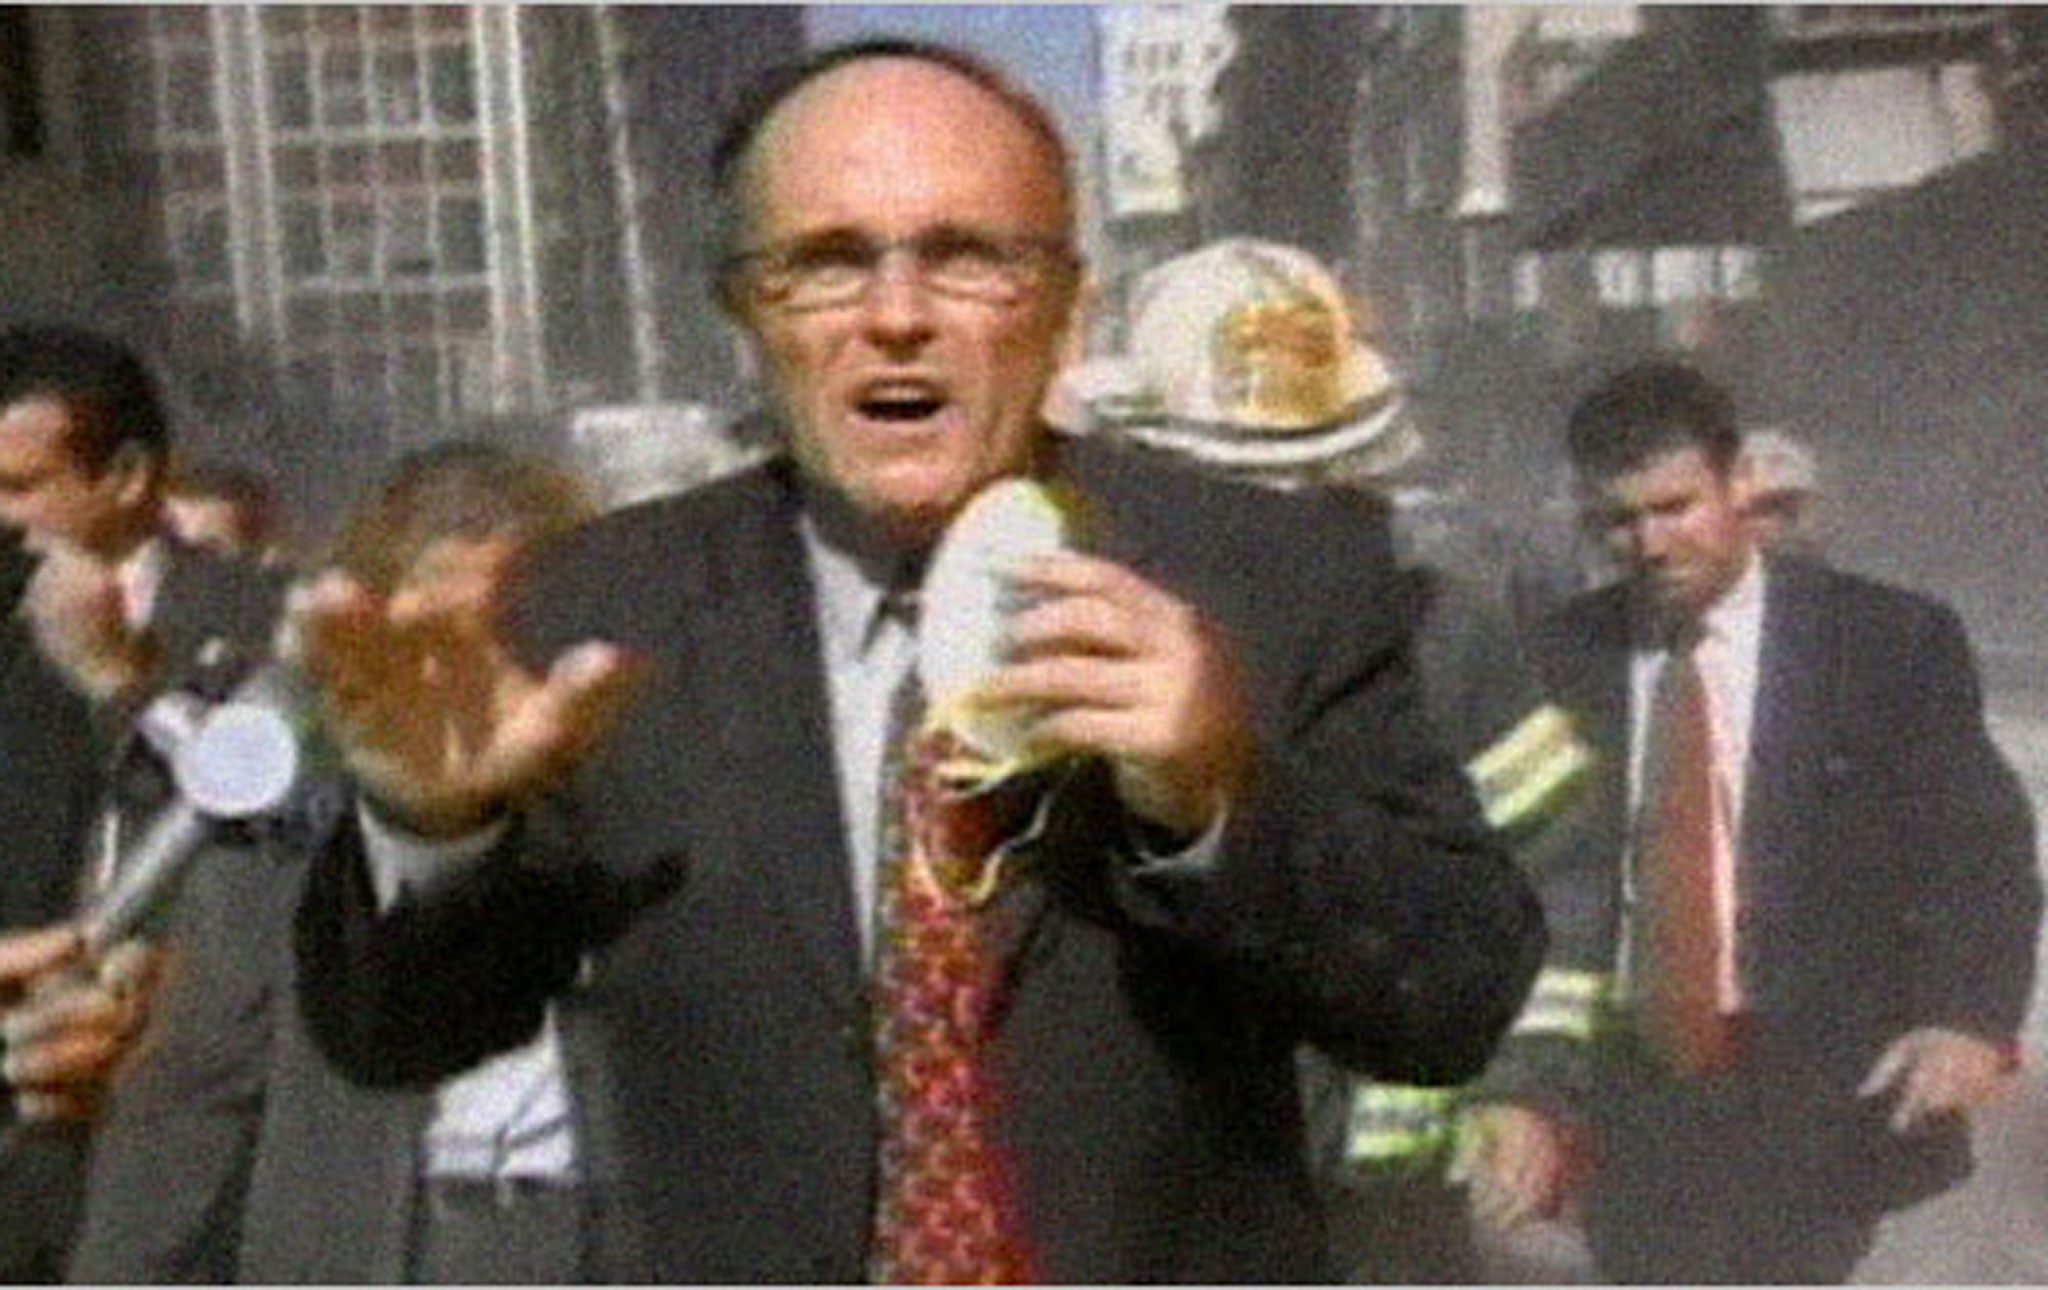 Giuliani during the September 11 attacks